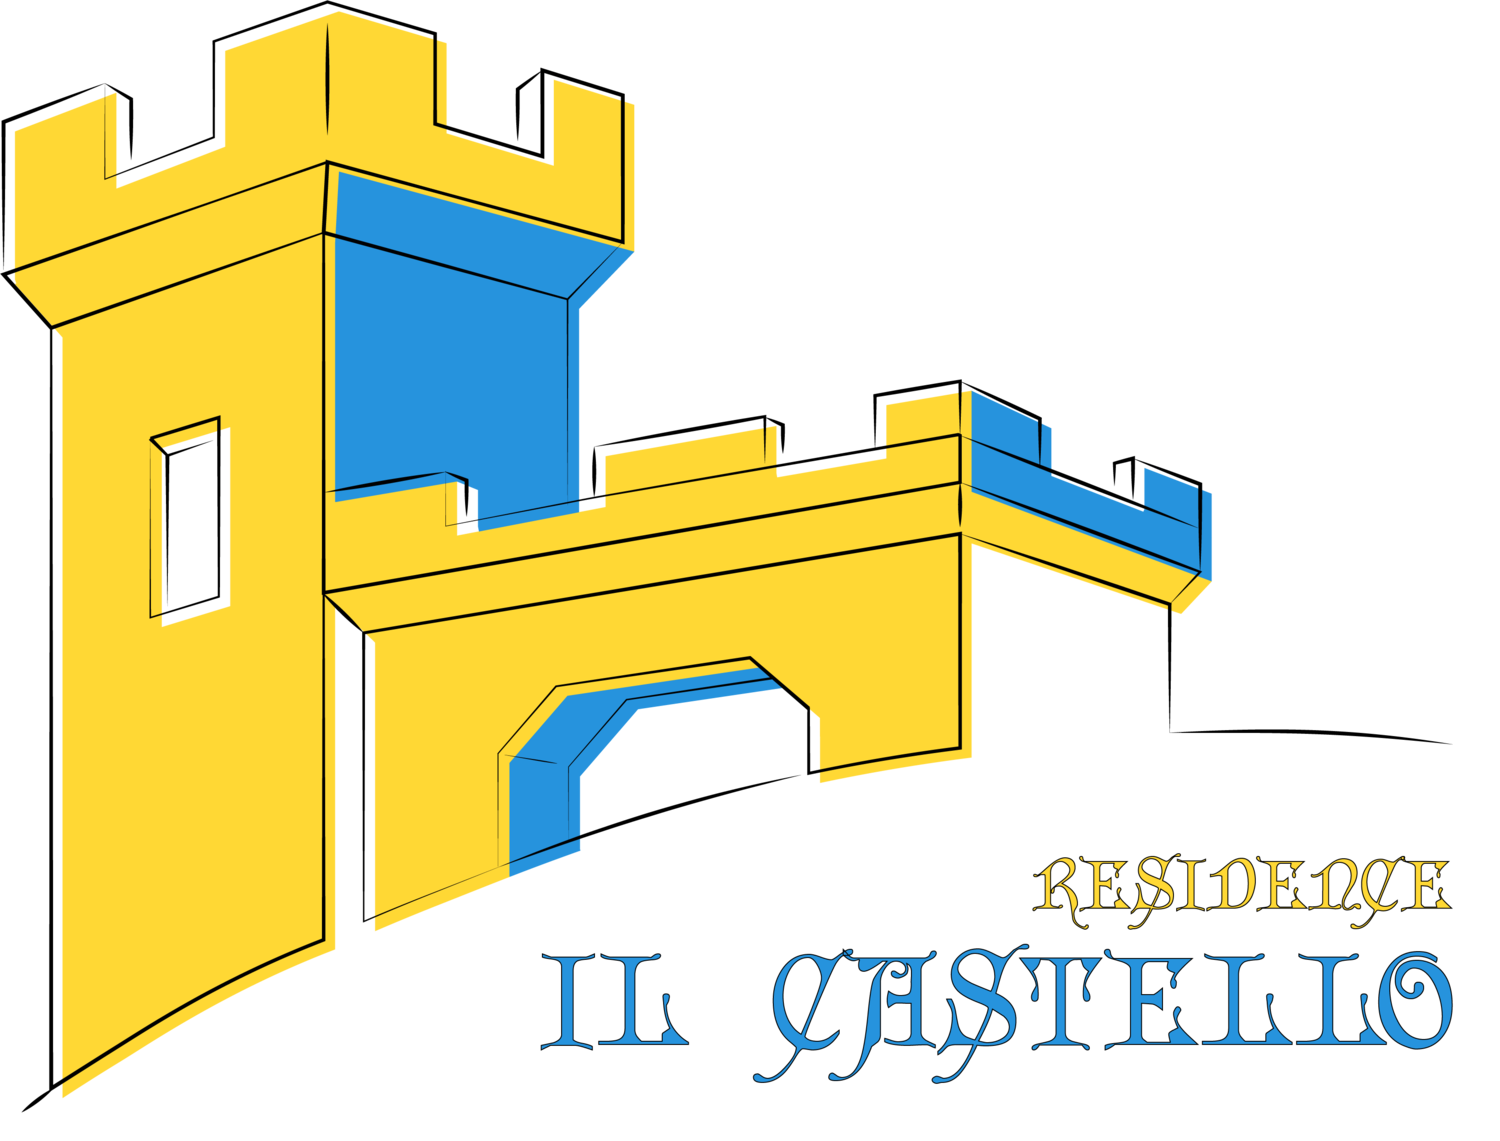 Residence Il Castello